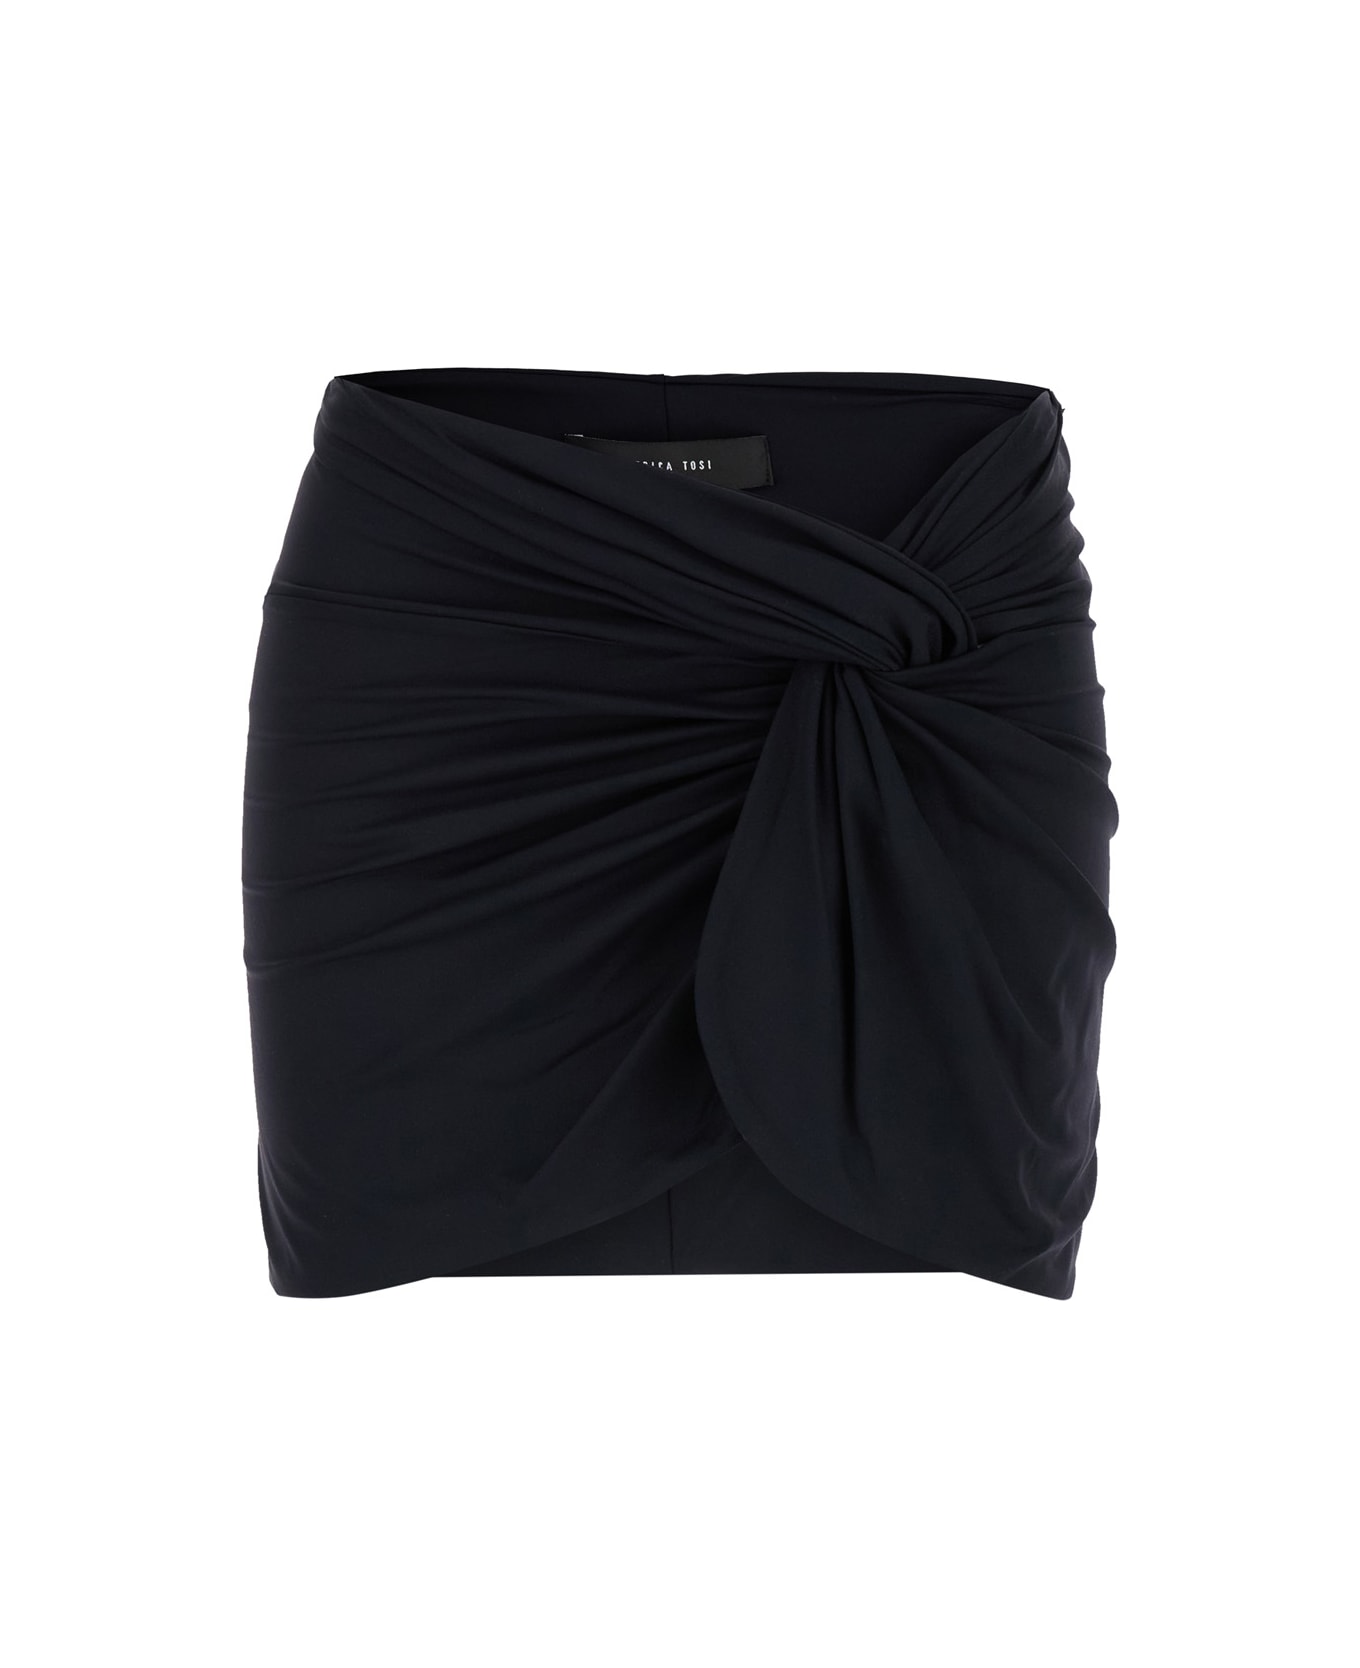 Federica Tosi Black Wrinkled Mini Skirt In Techno Fabric Stretch Woman - Black スカート